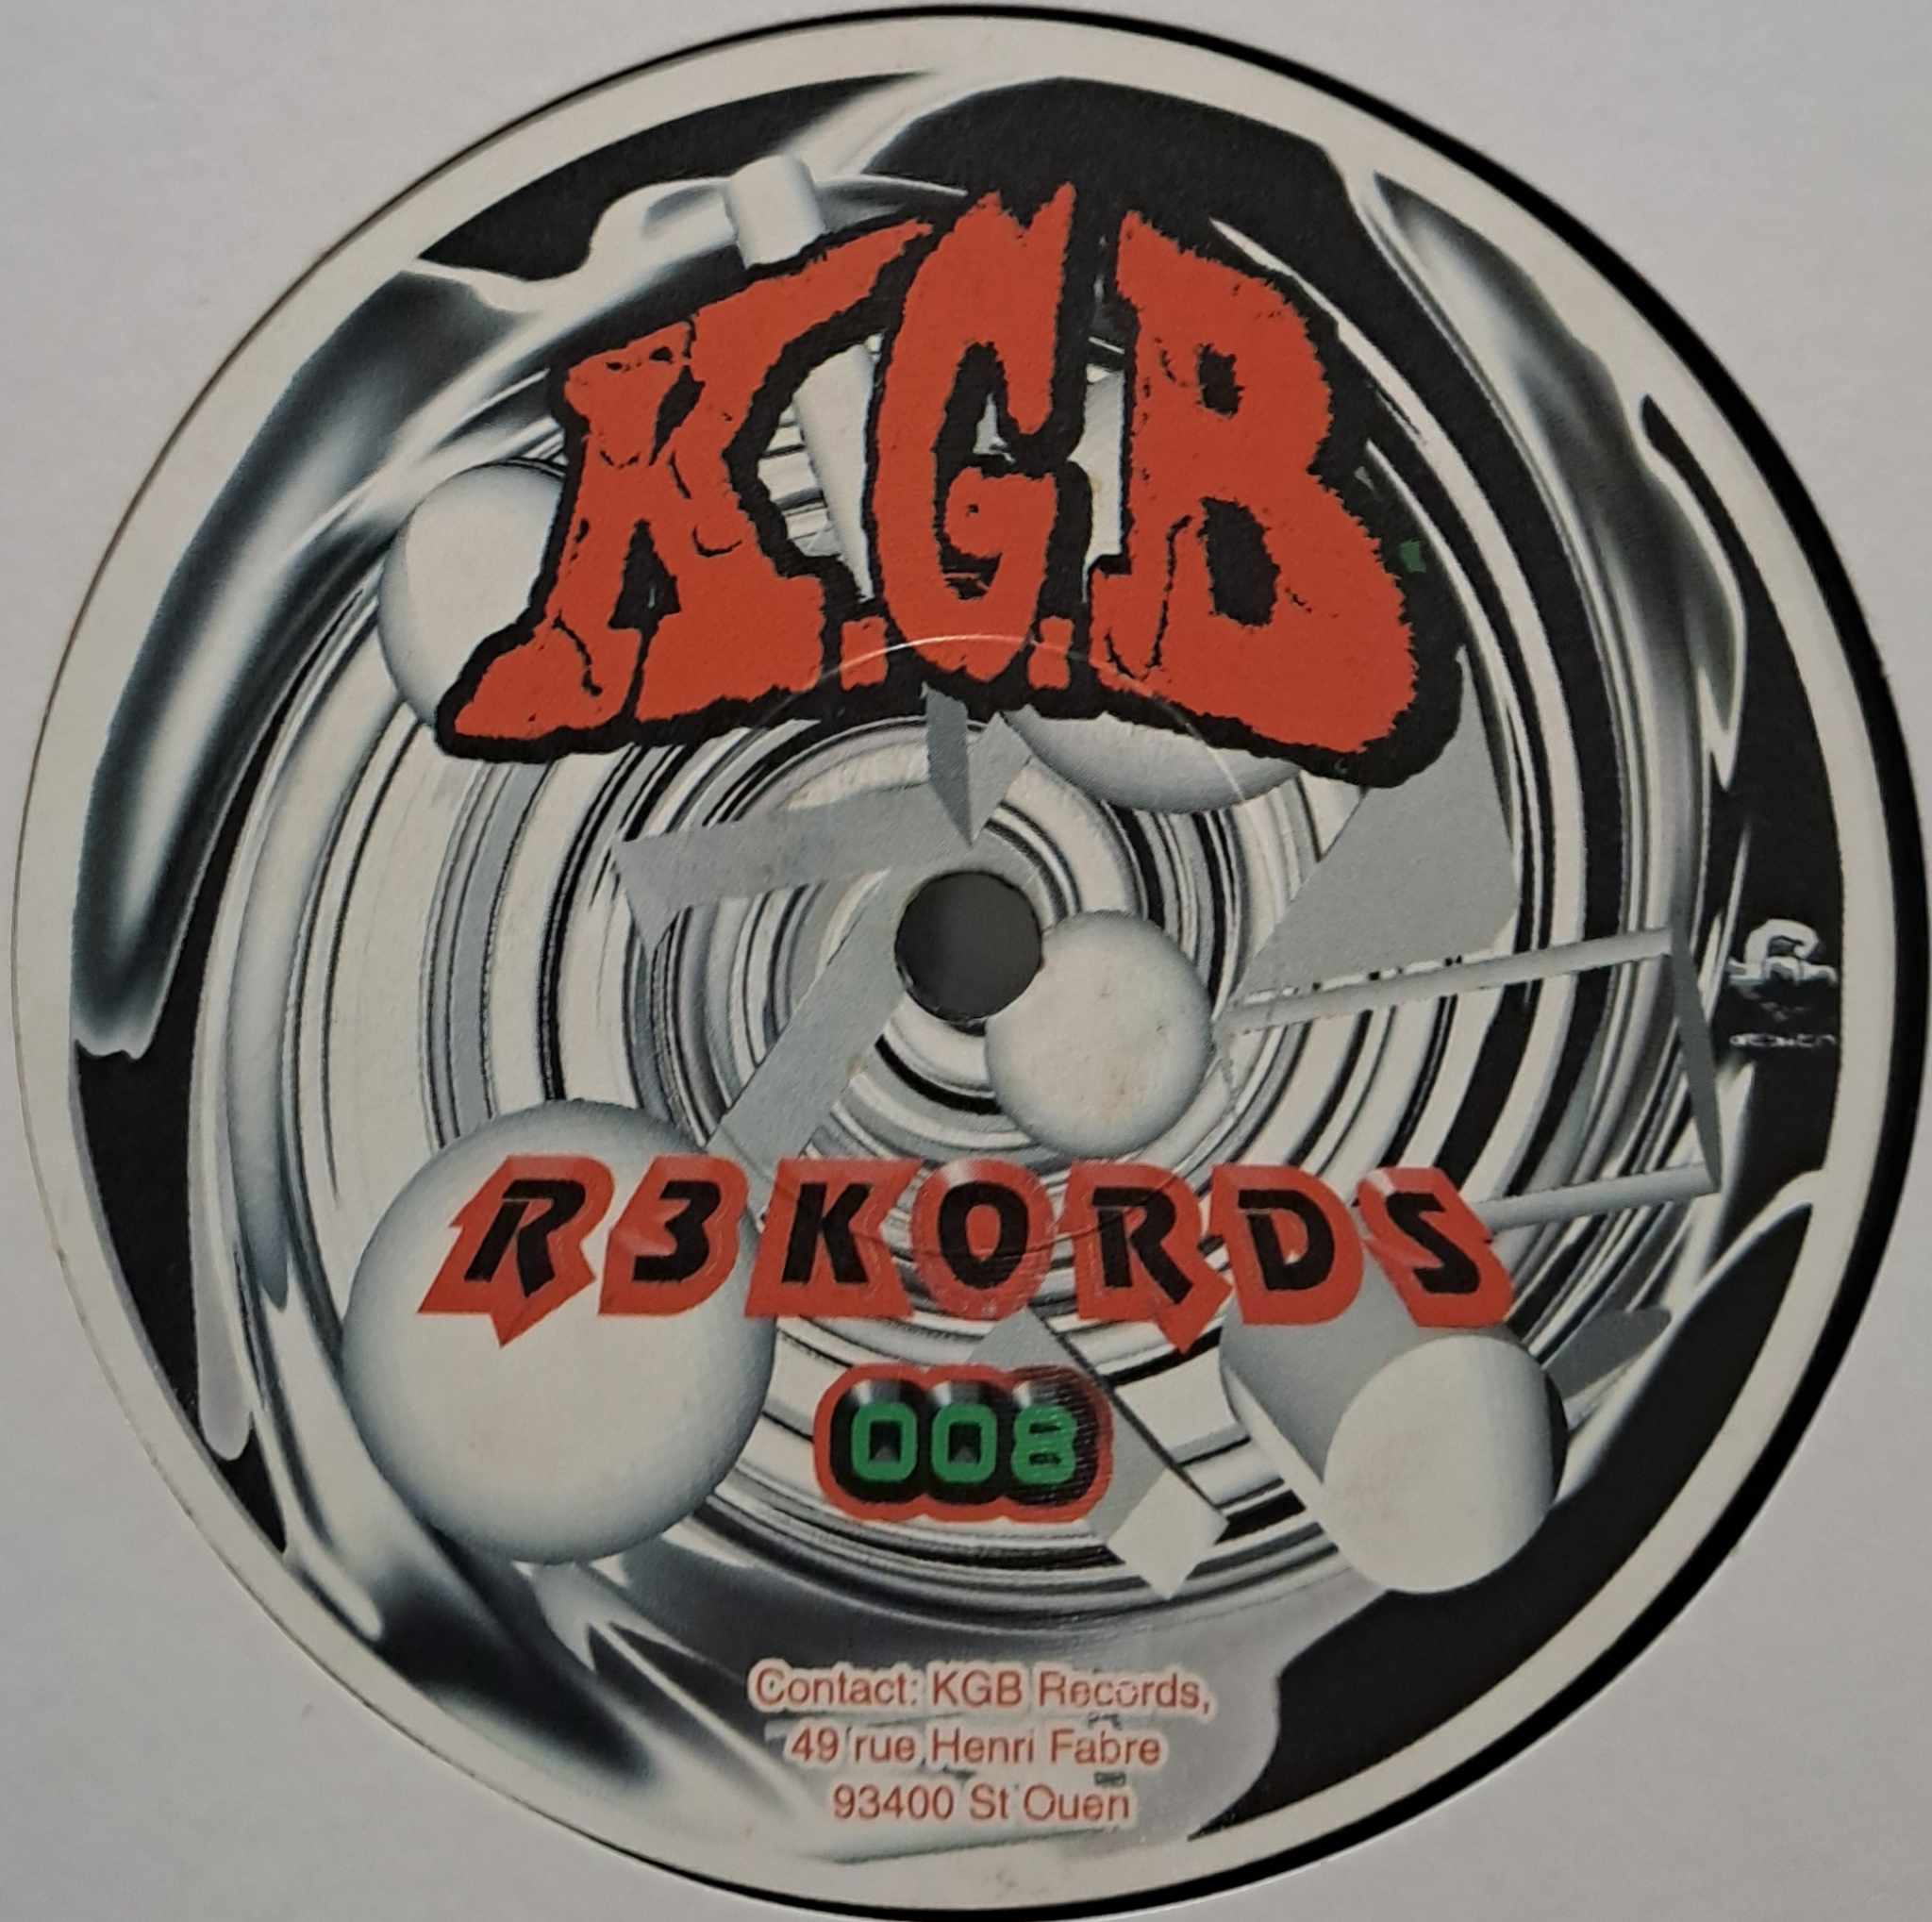 KGB 08 - vinyle freetekno